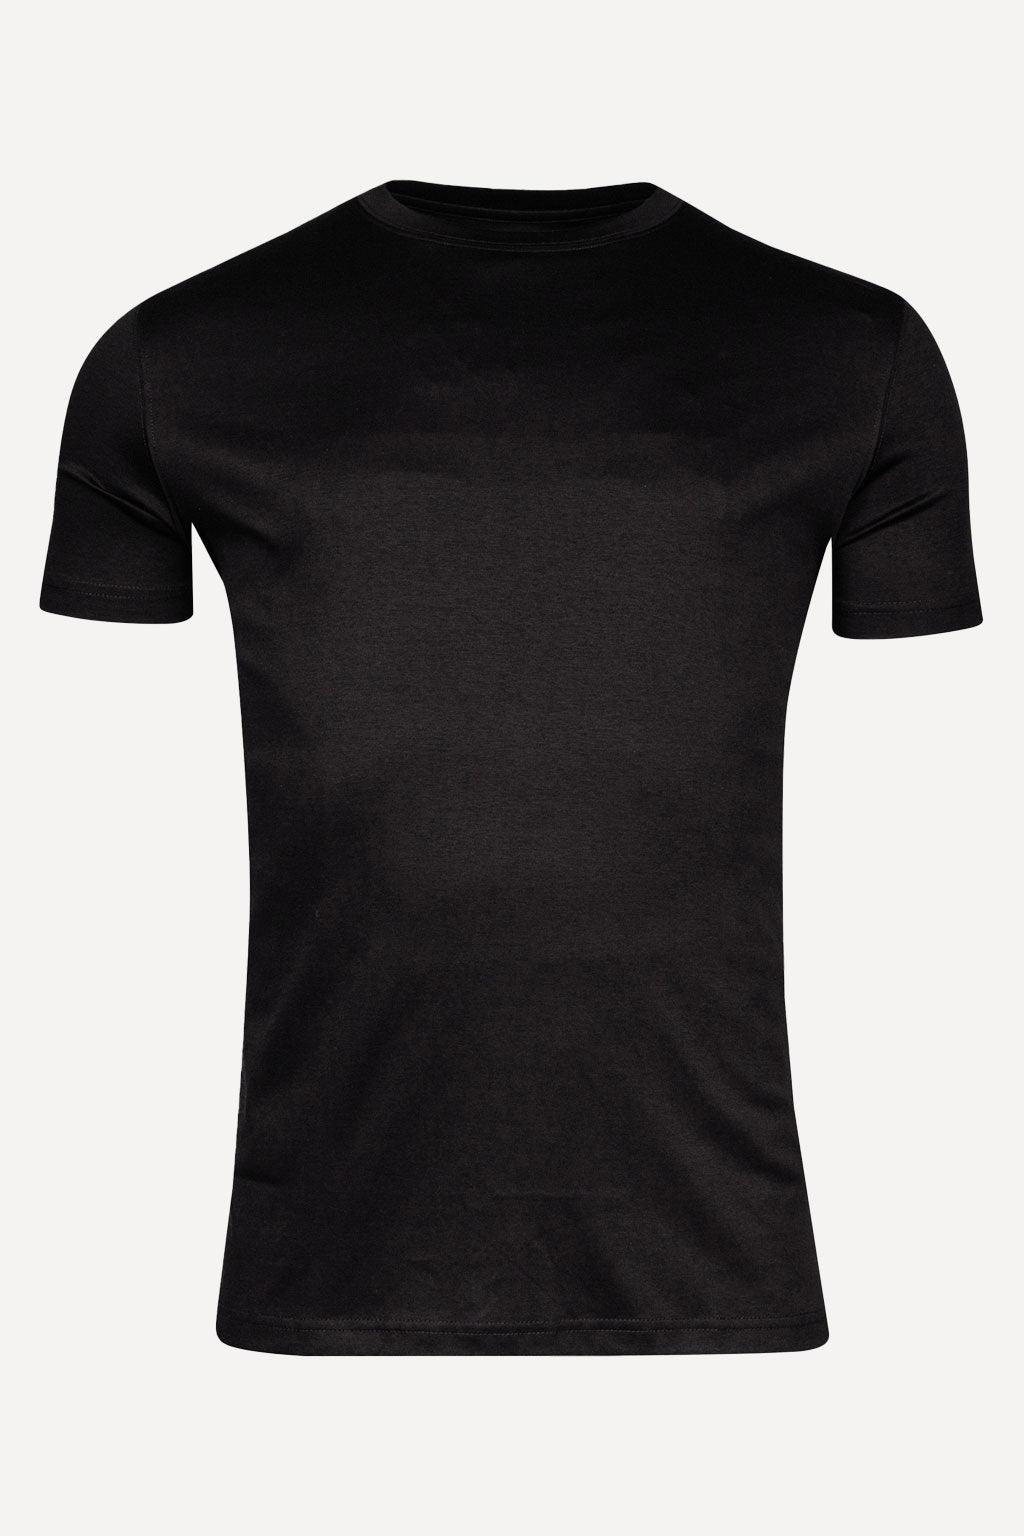 Thomas Maine t-shirt - Big Boss | the menswear concept